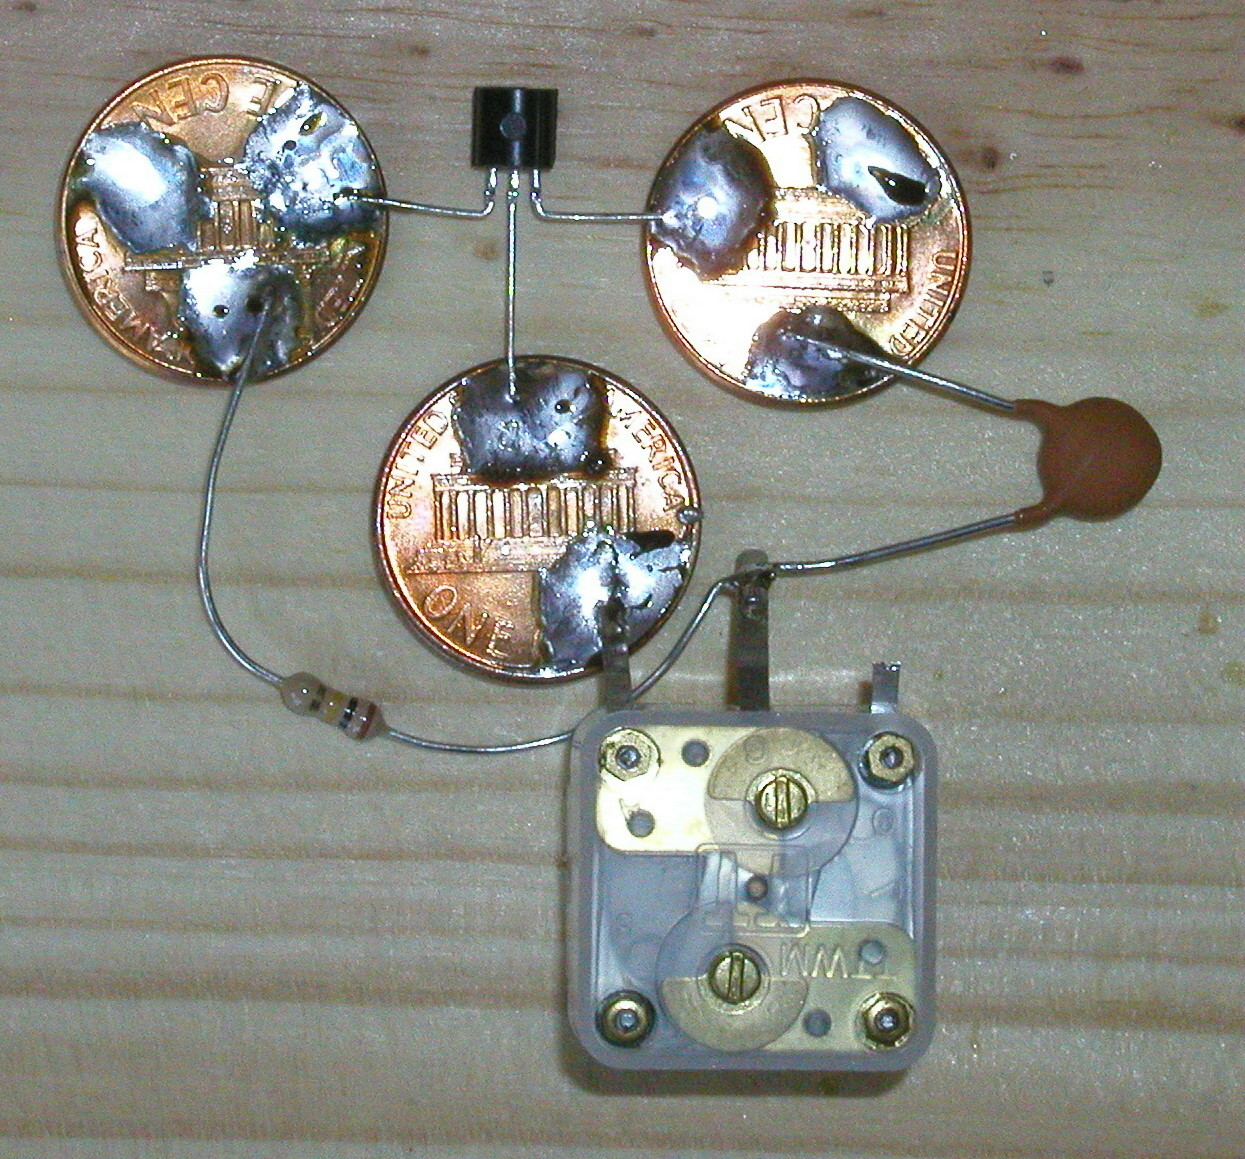 First resistor